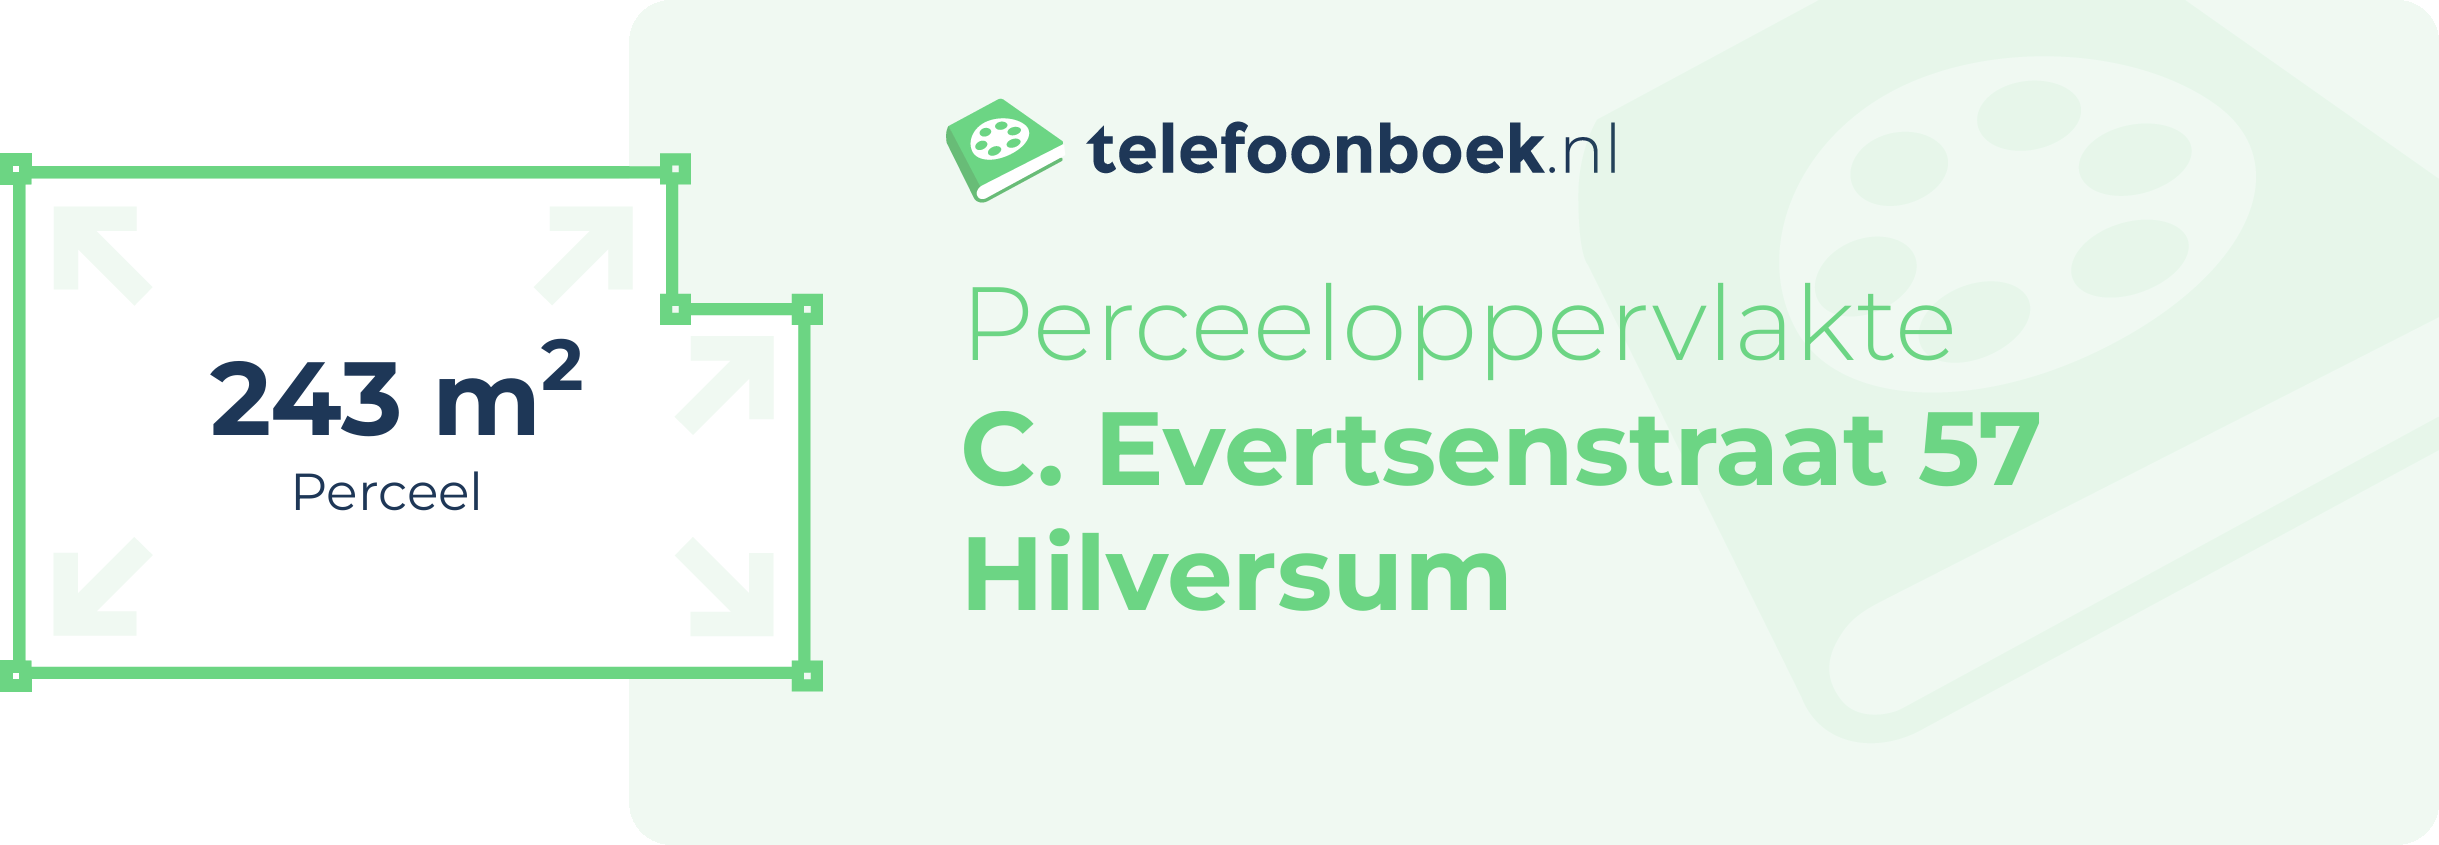 Perceeloppervlakte C. Evertsenstraat 57 Hilversum